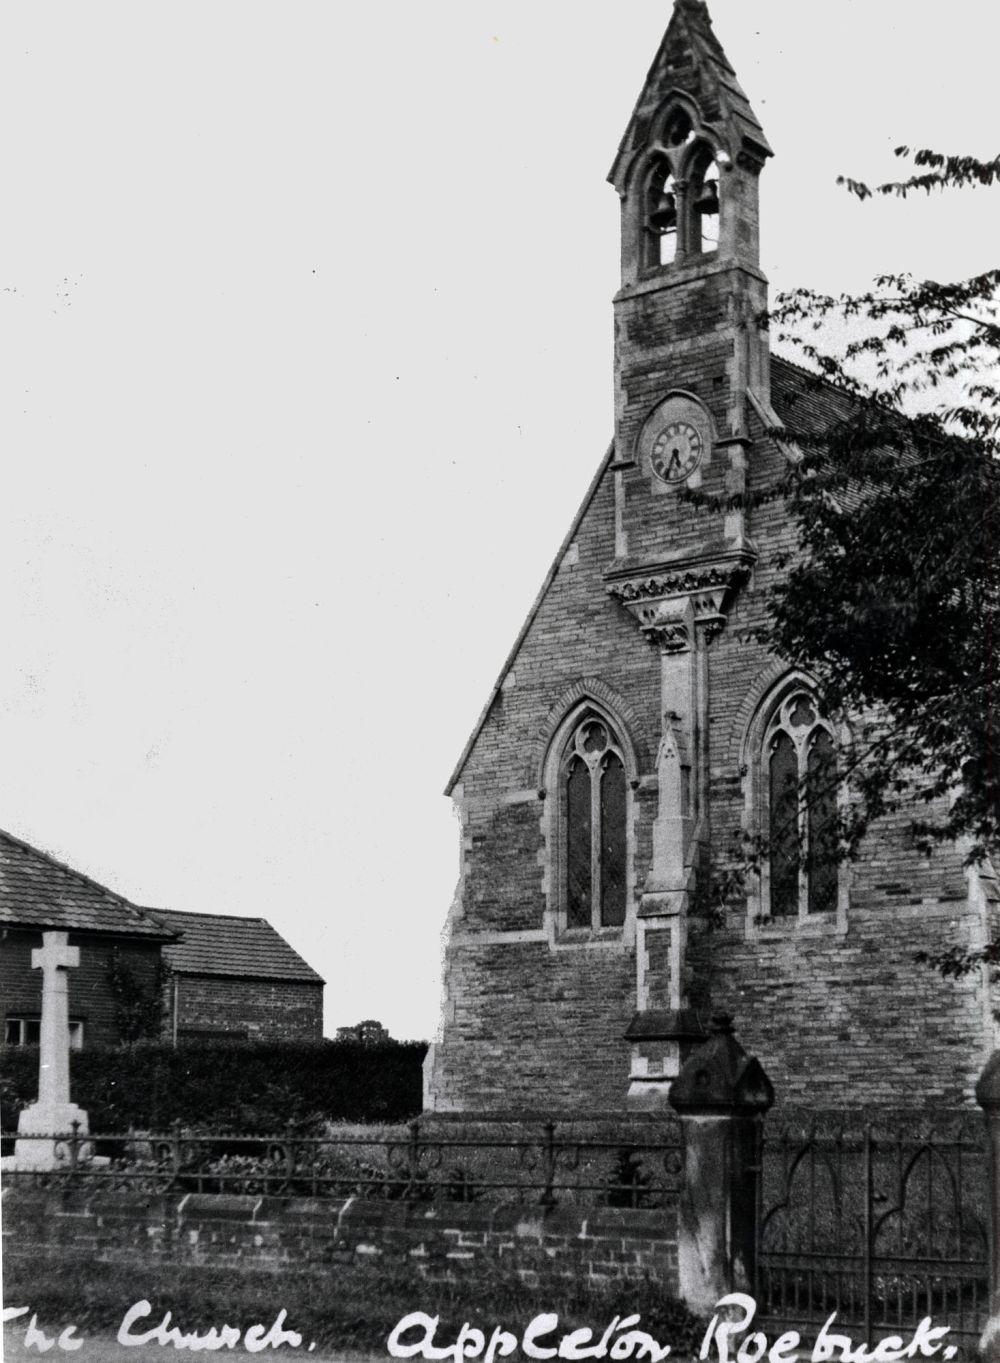 Appleton church and cenotaph